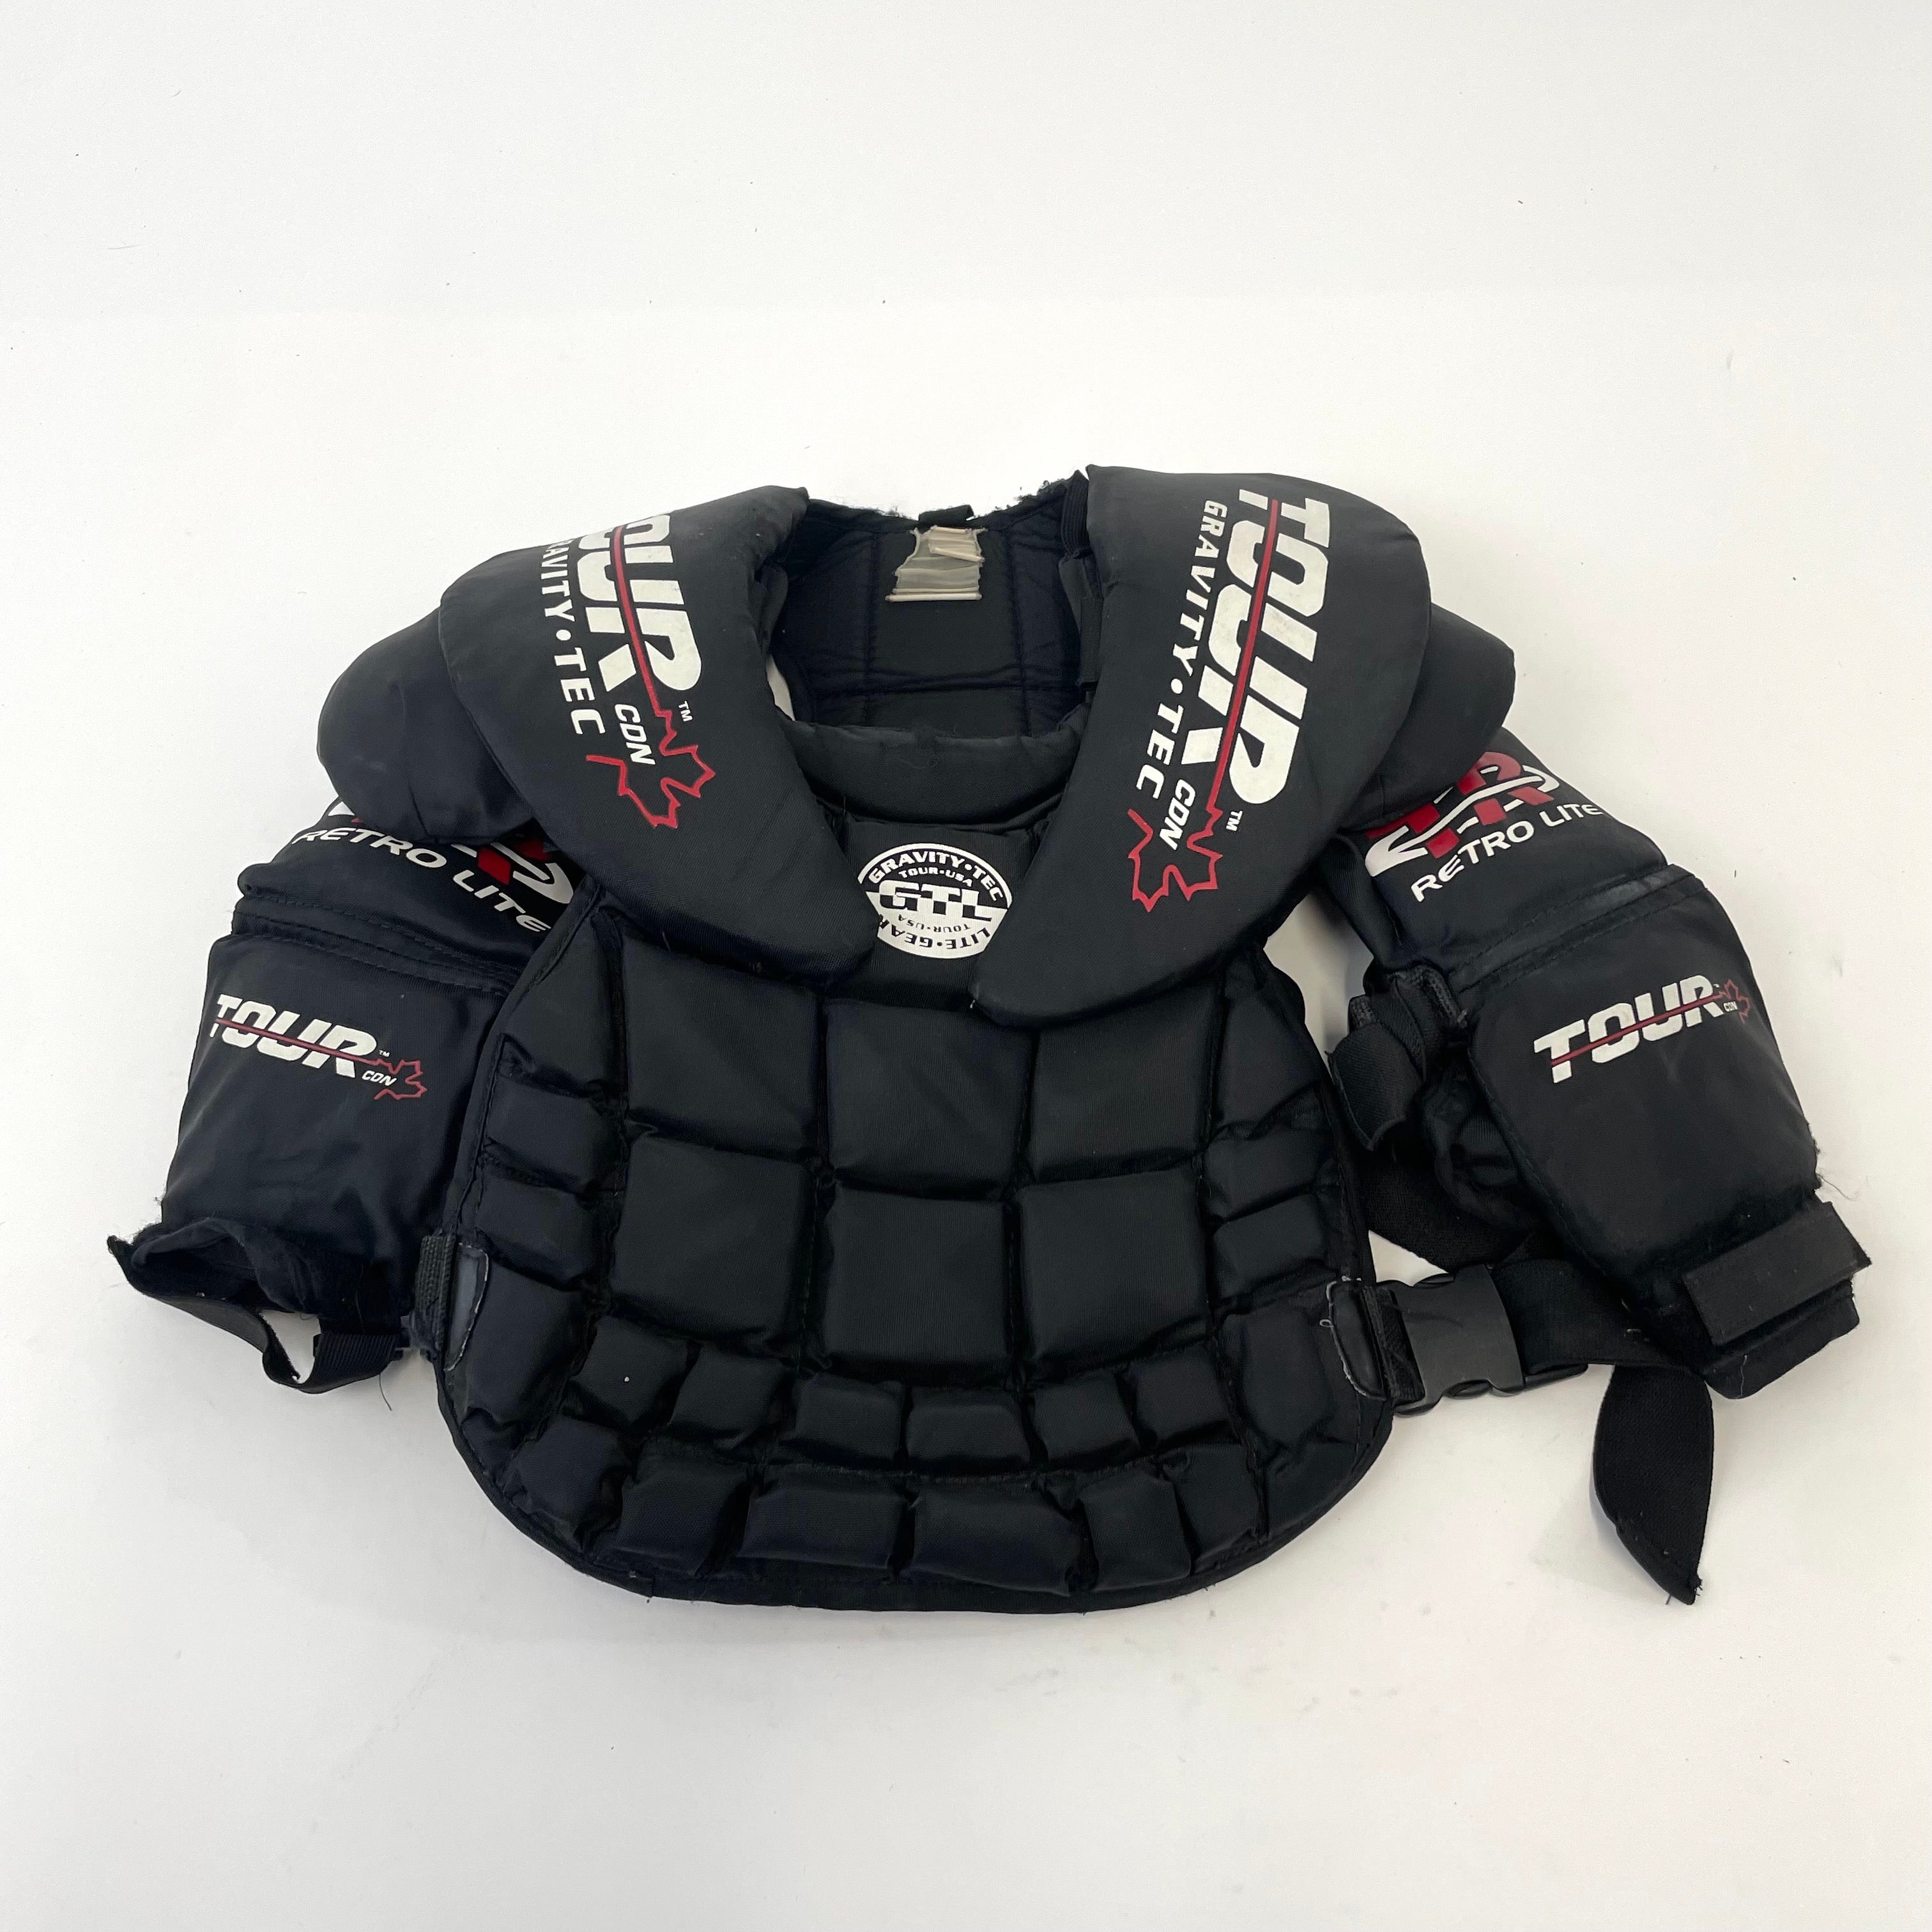 Tour Invader 150 Street Hockey Goalie Glove Adult Size 27” New 